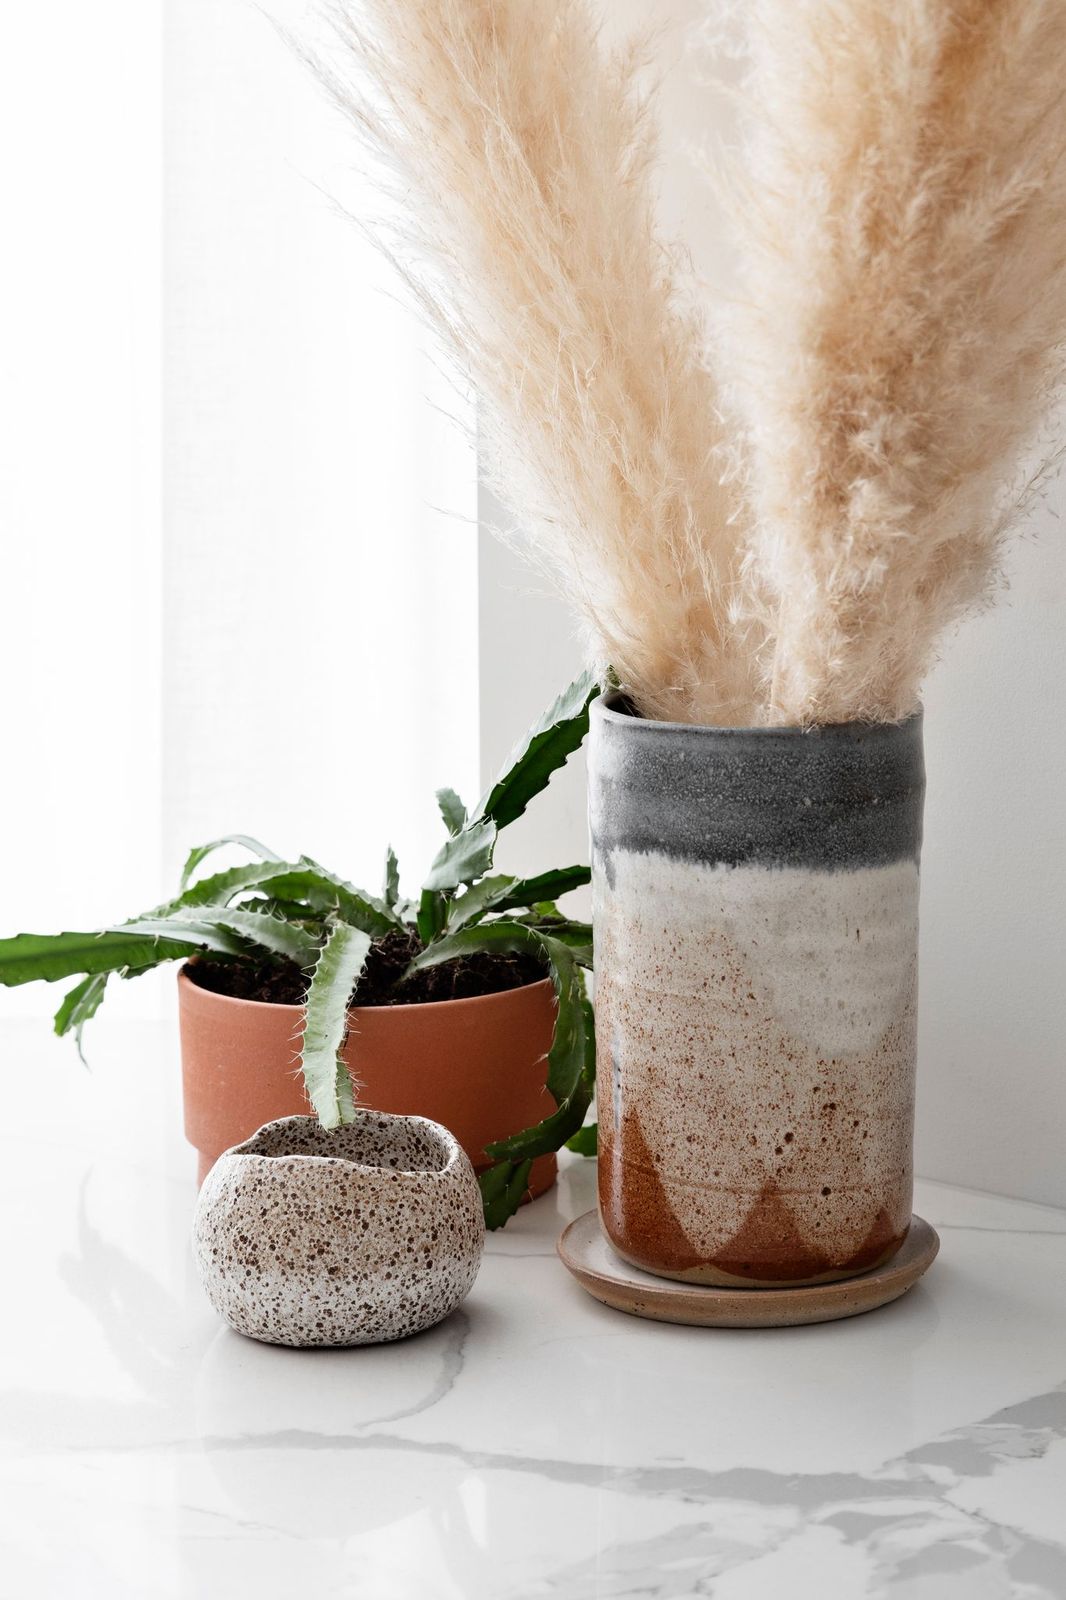 Ceramic pieces and indoor plant in kitchen vignette